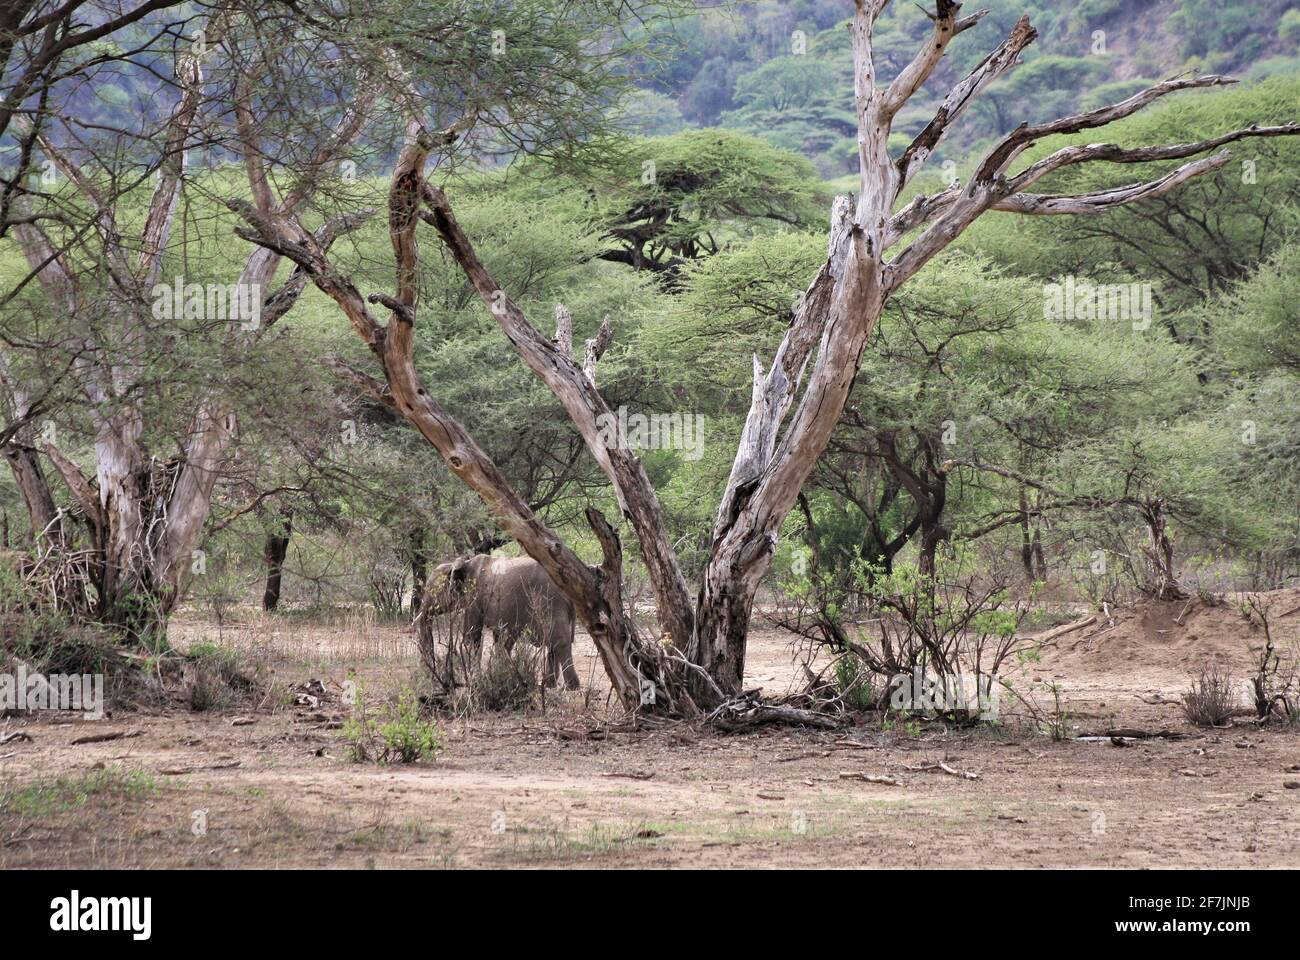 Elefante nel Parco Nazionale del Lago Manyara in Tanzania, Africa. Foto Stock